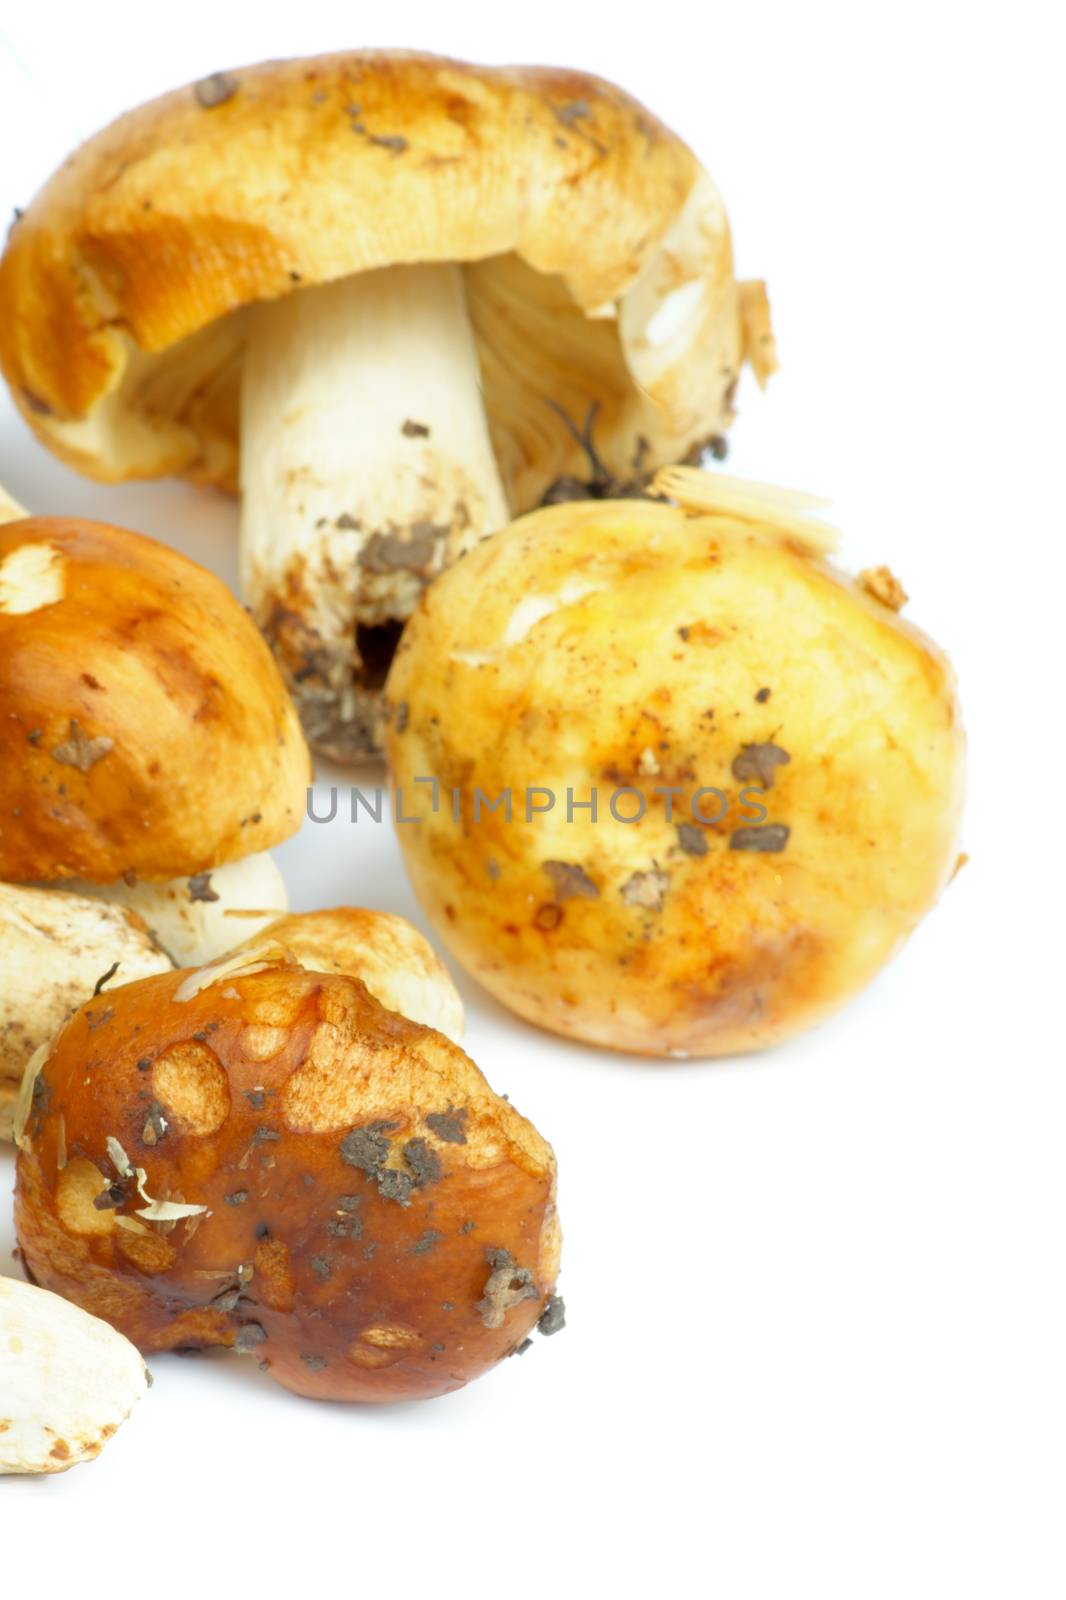 Raw Edible Mushrooms by zhekos